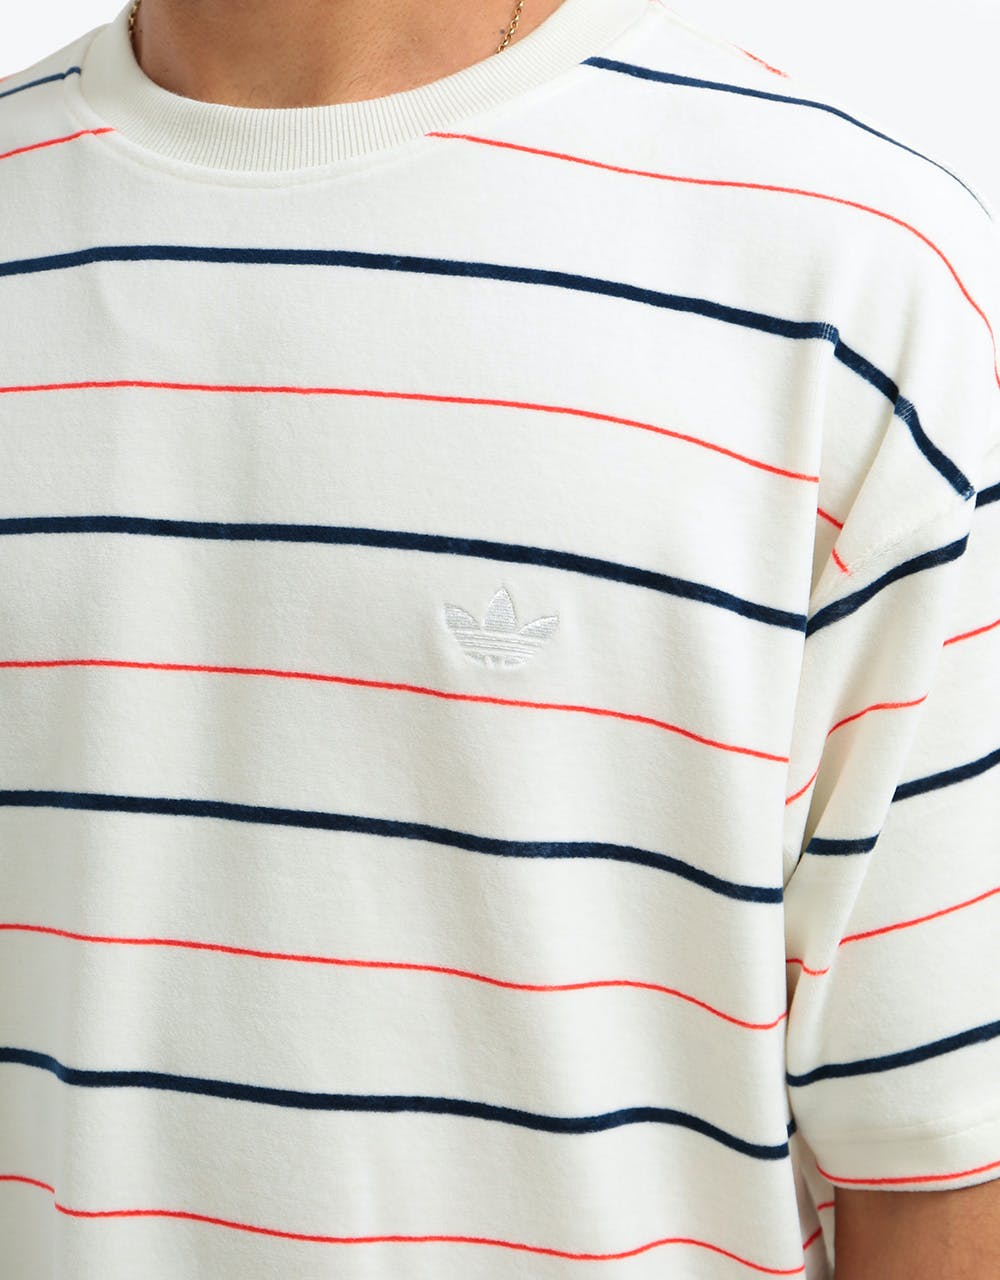 Adidas Velour Jersey T-Shirt - Off White/Collegiate Navy/Scarlet